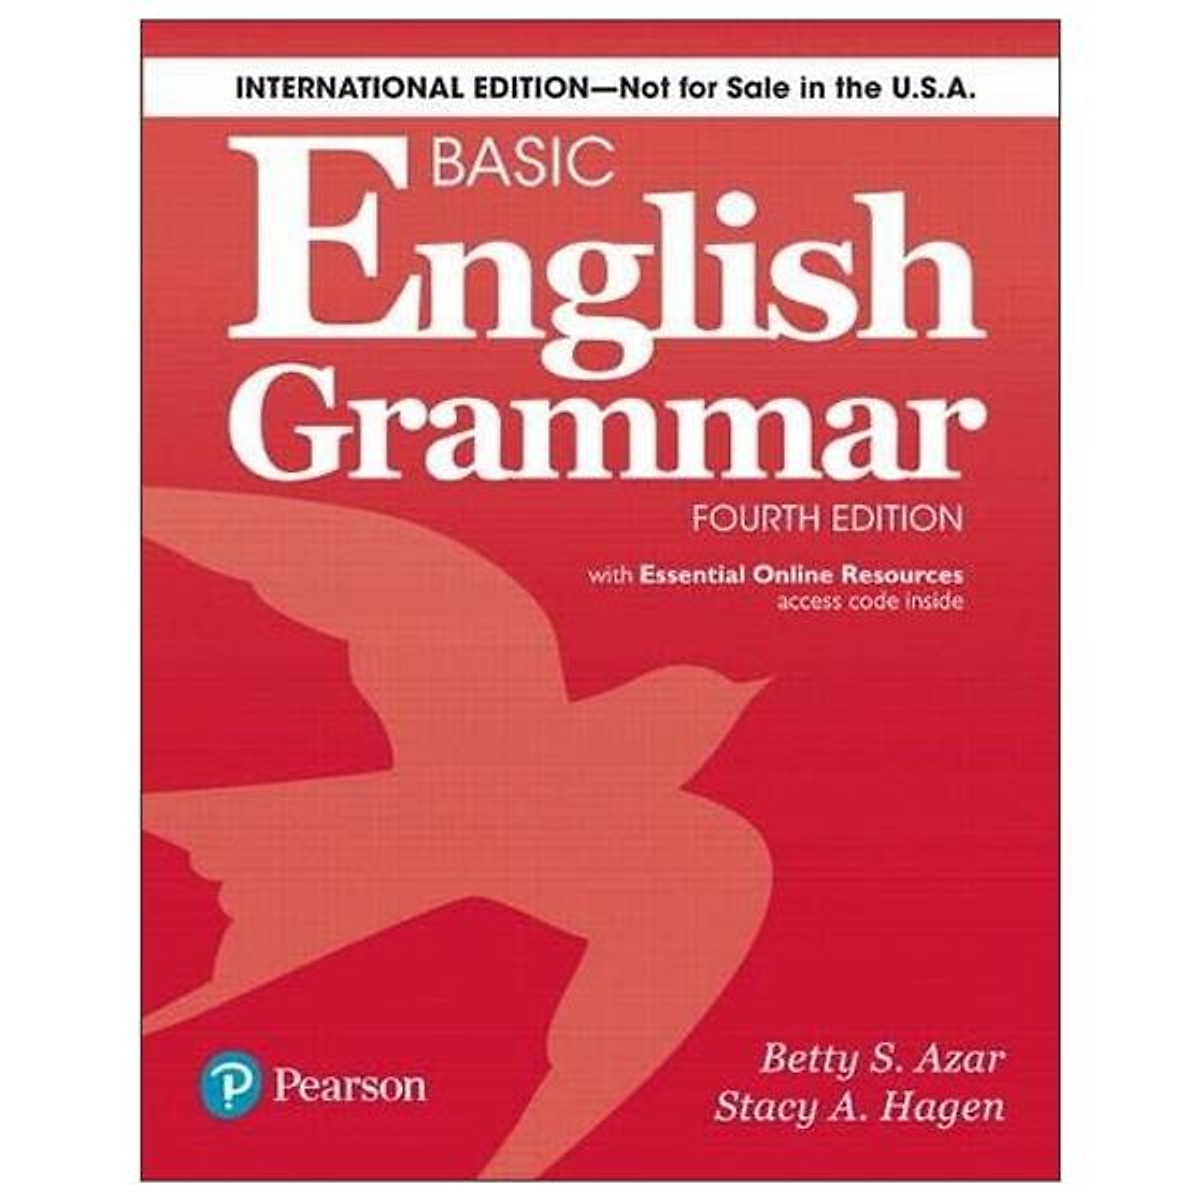 Basic English Grammar 4e Student Book With MyLab English, International Edition